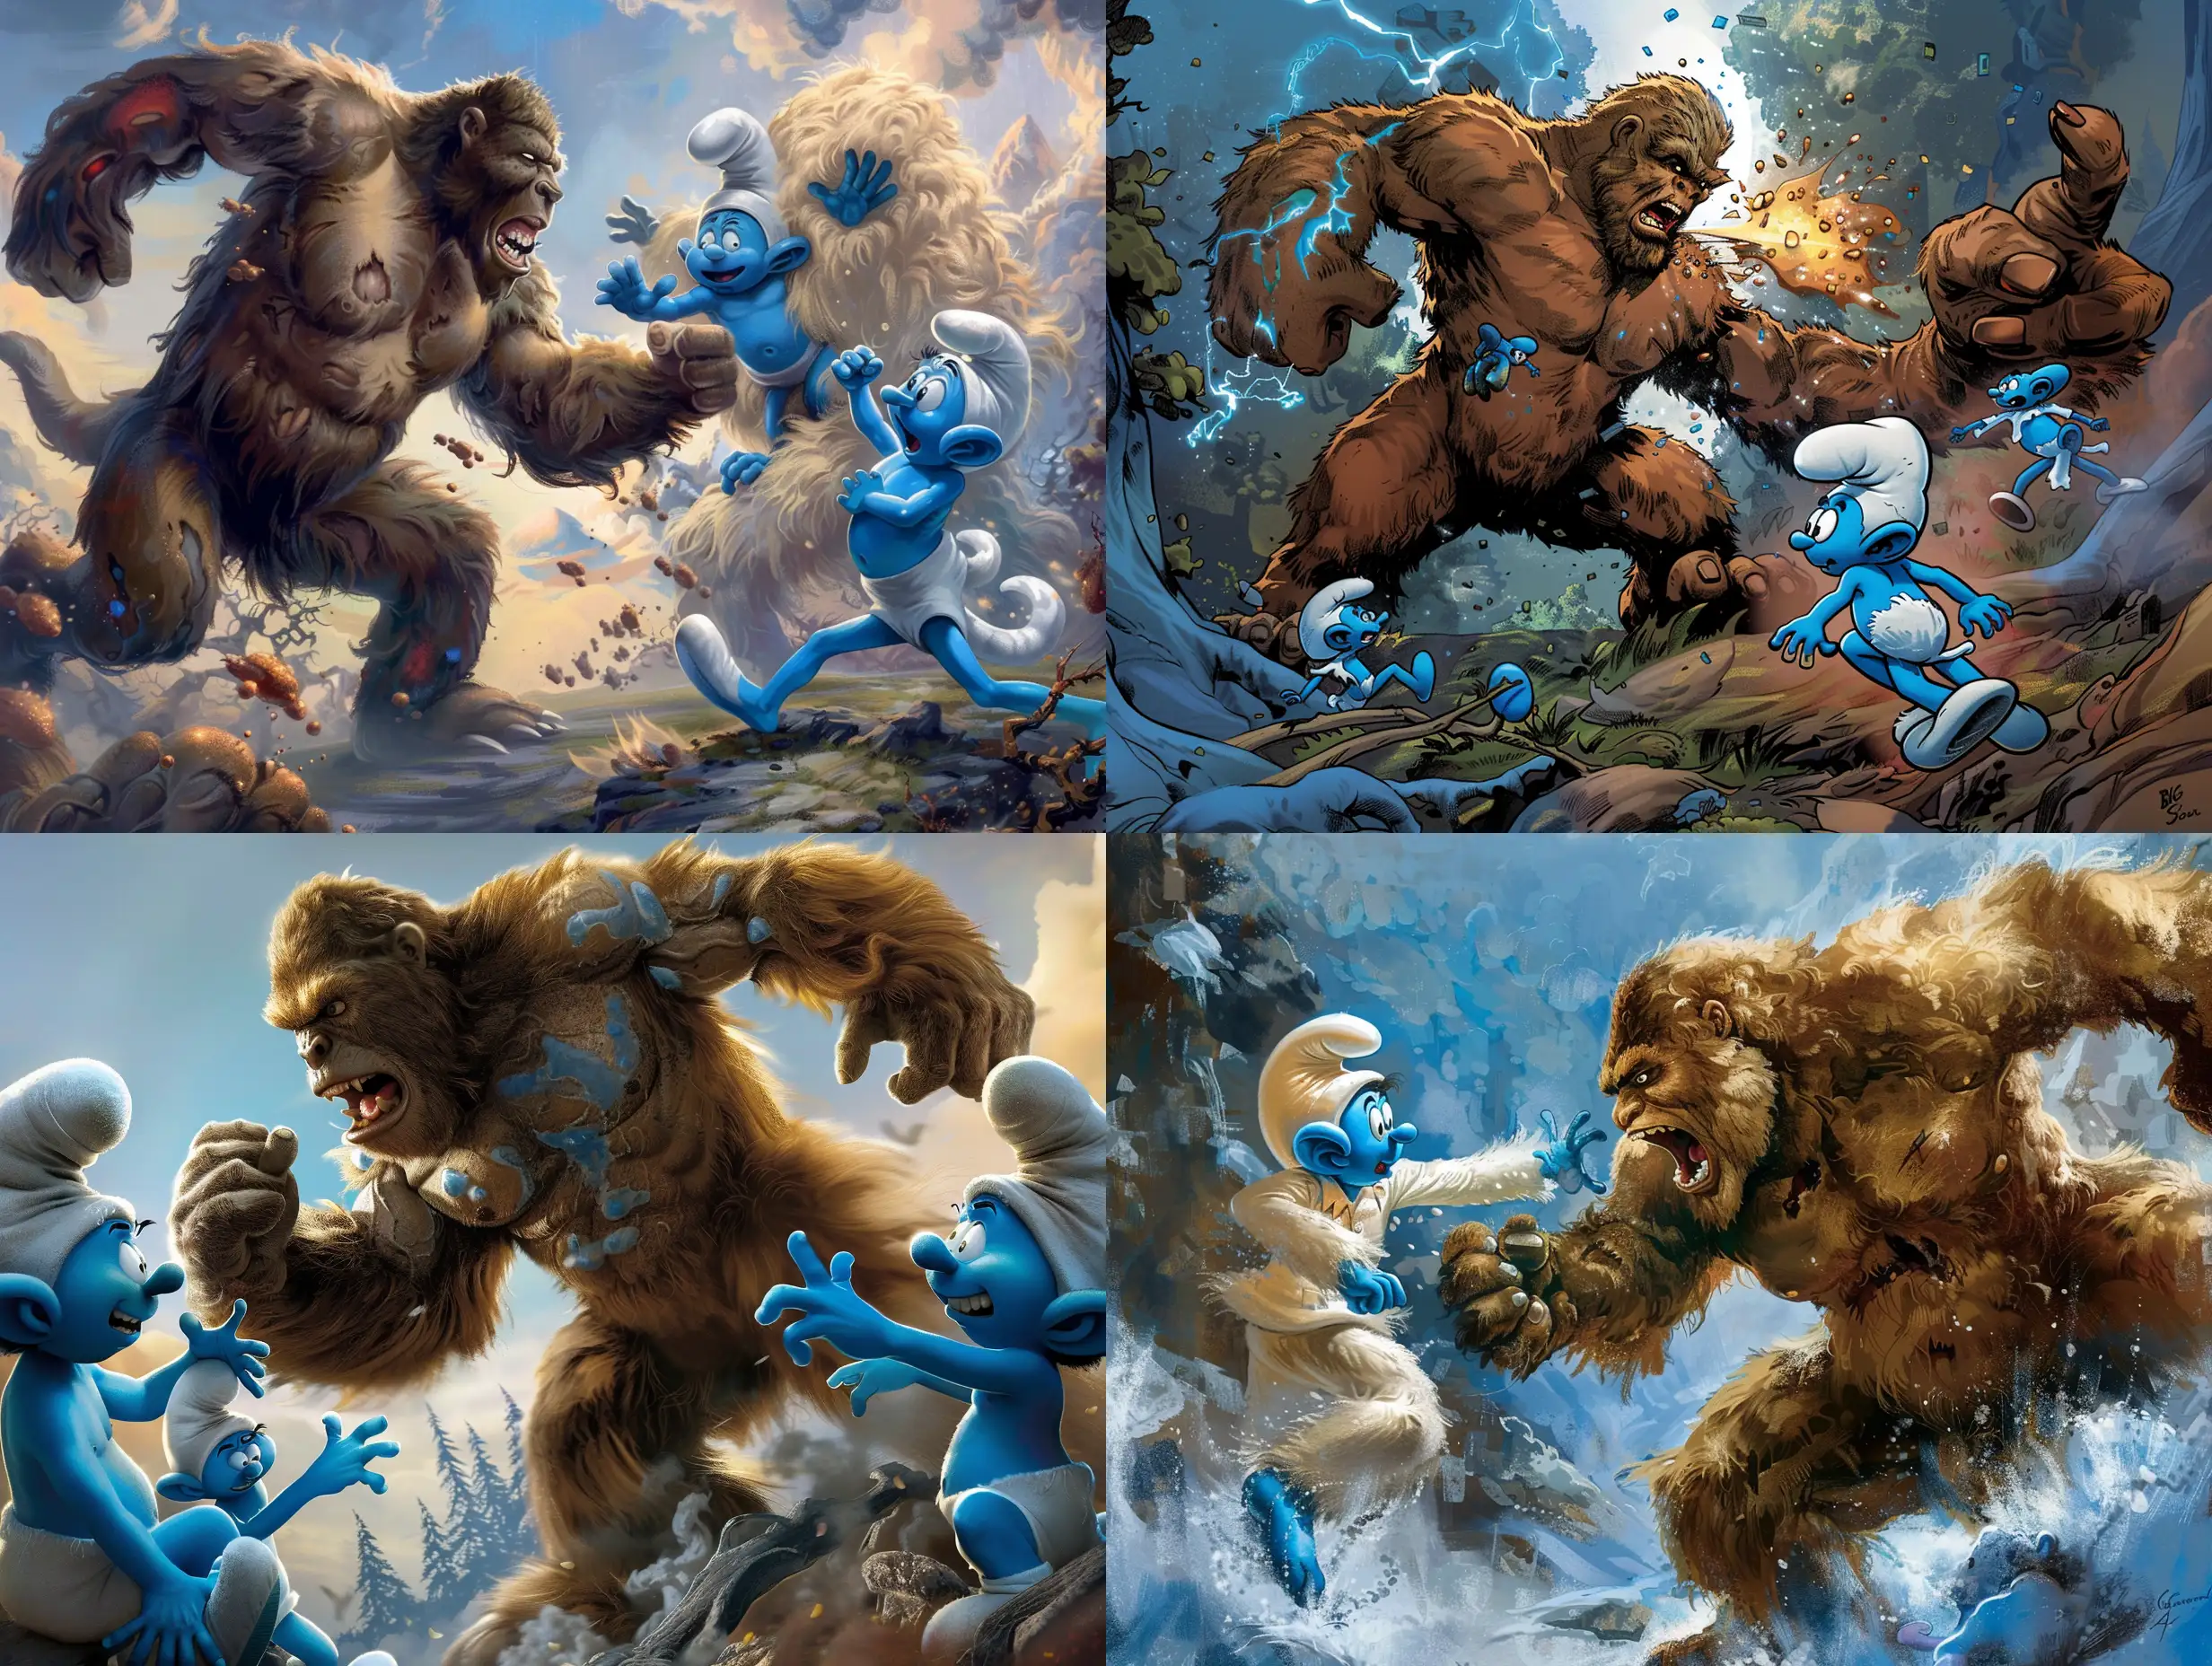 Epic-Battle-Bigfoot-vs-Smurfs-in-a-Forest-Showdown